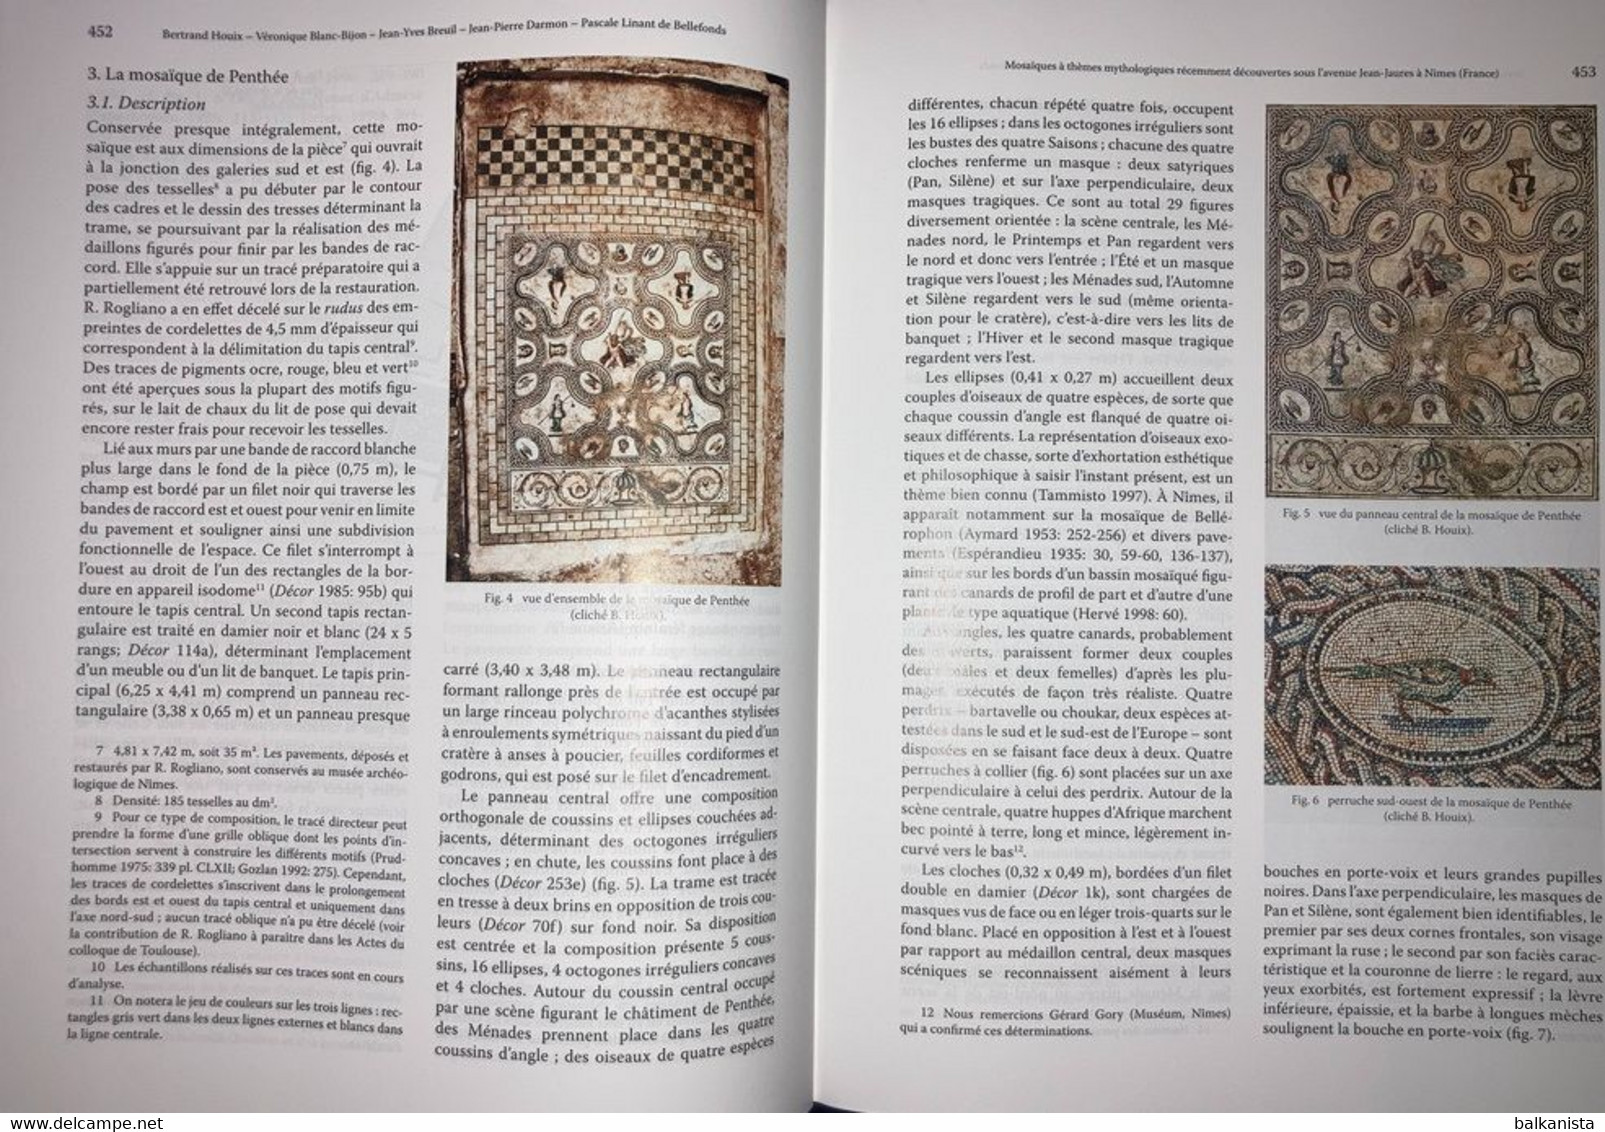 11th International Colloquium on Ancient Mosaics - Mosaics of Turkey